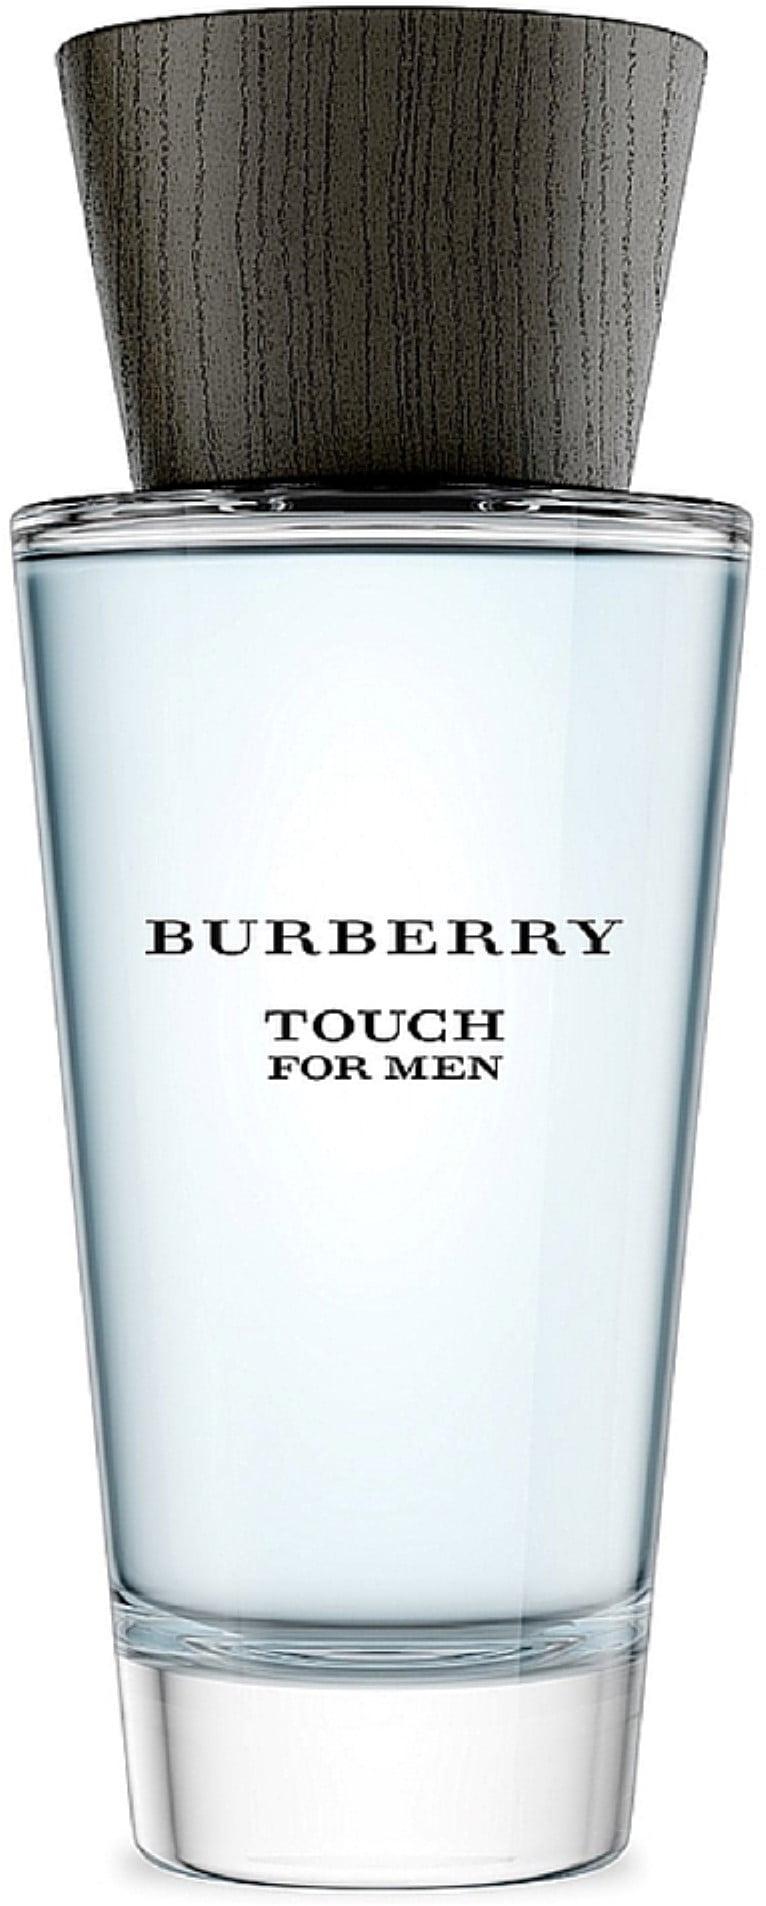 burberry touch for men 3.3 fl oz